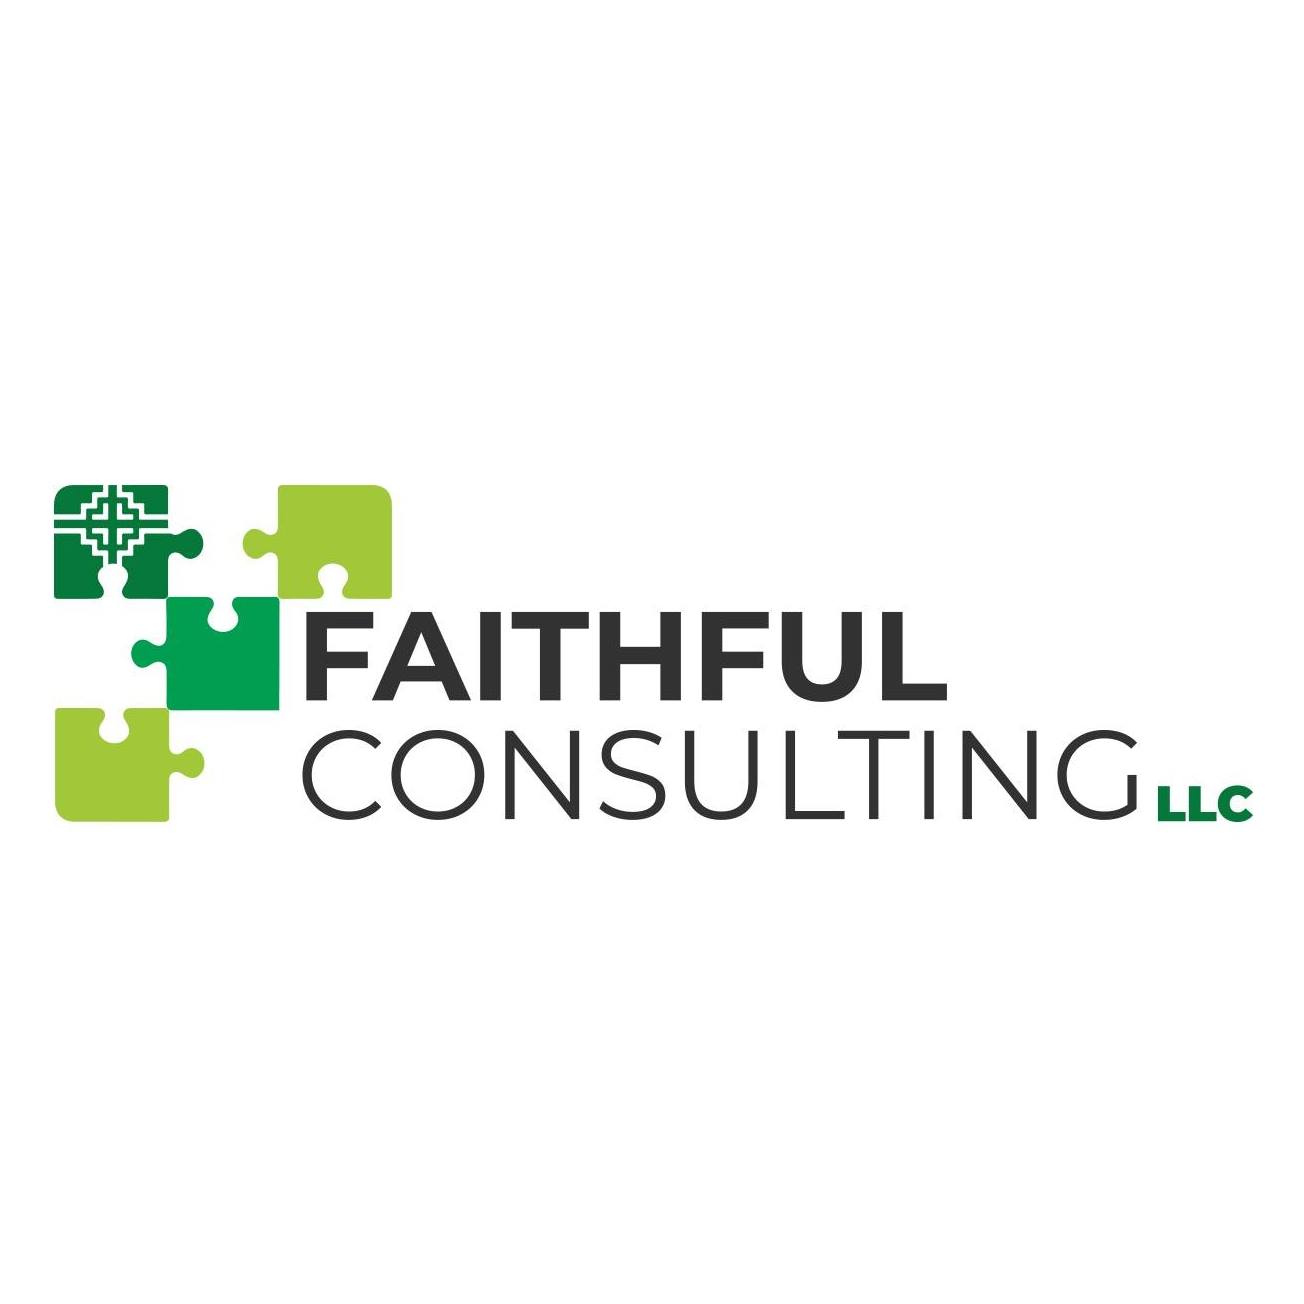 Faithful Consulting